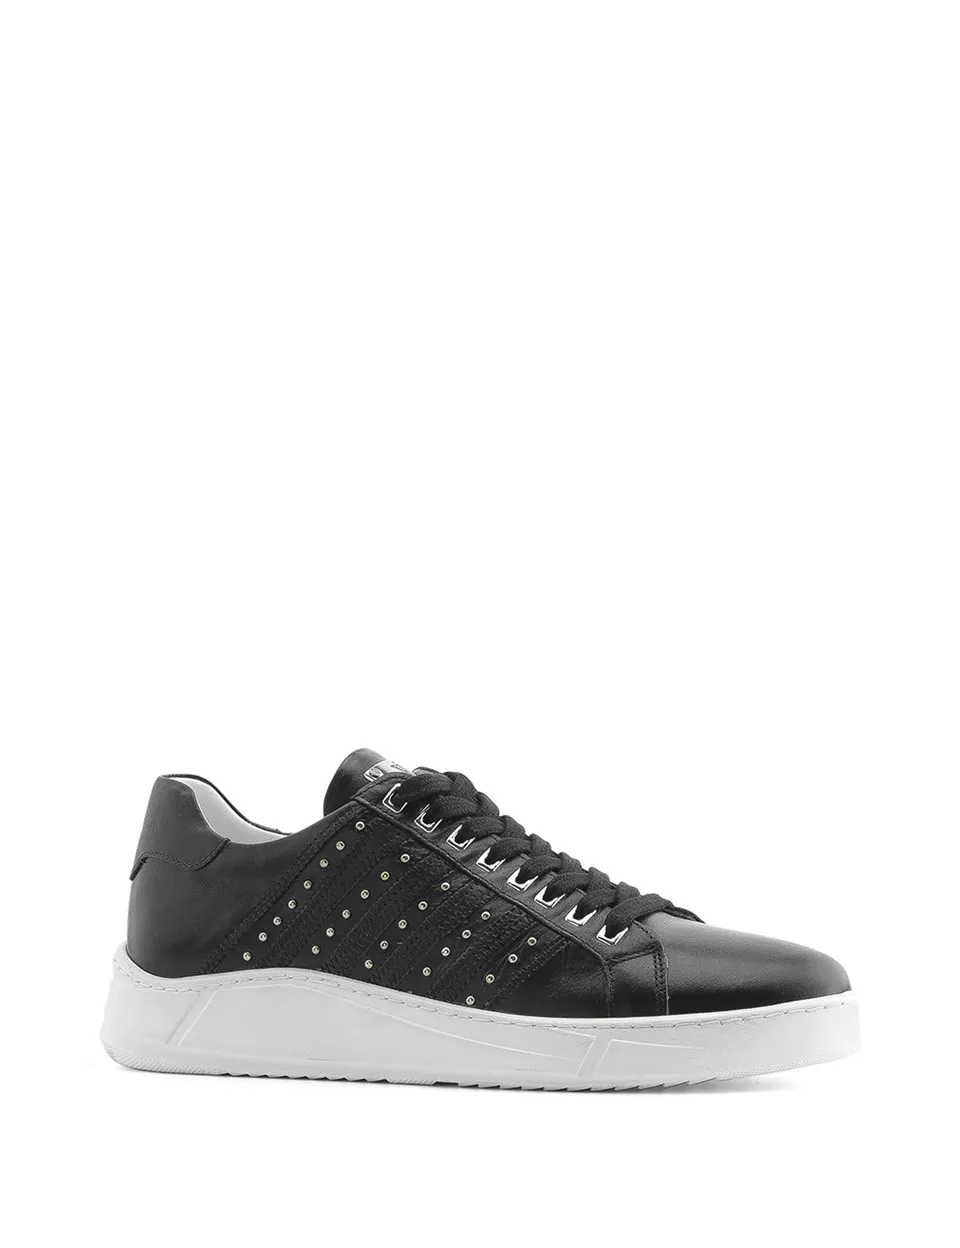 

ILVi-Genuine Leather Handmade Teodora Men's Sneaker Black Nappa Men Shoes 2020 Spring Summer (Made in Turkey)